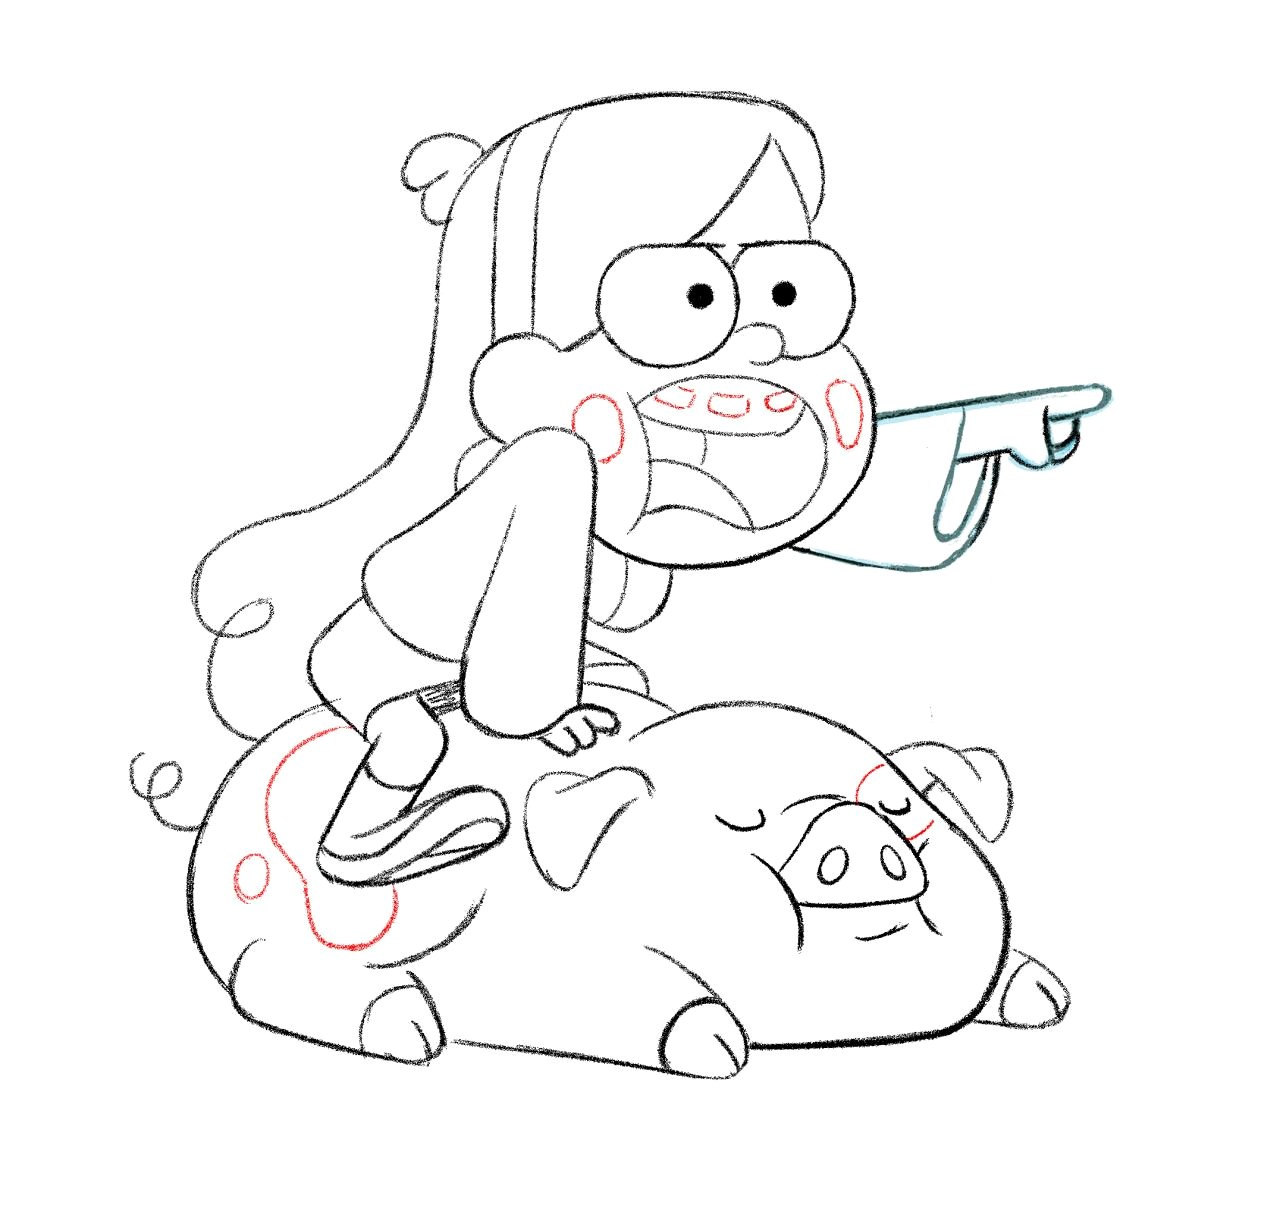 Gravity Falls Mabel und Waddles aus Gravity Falls